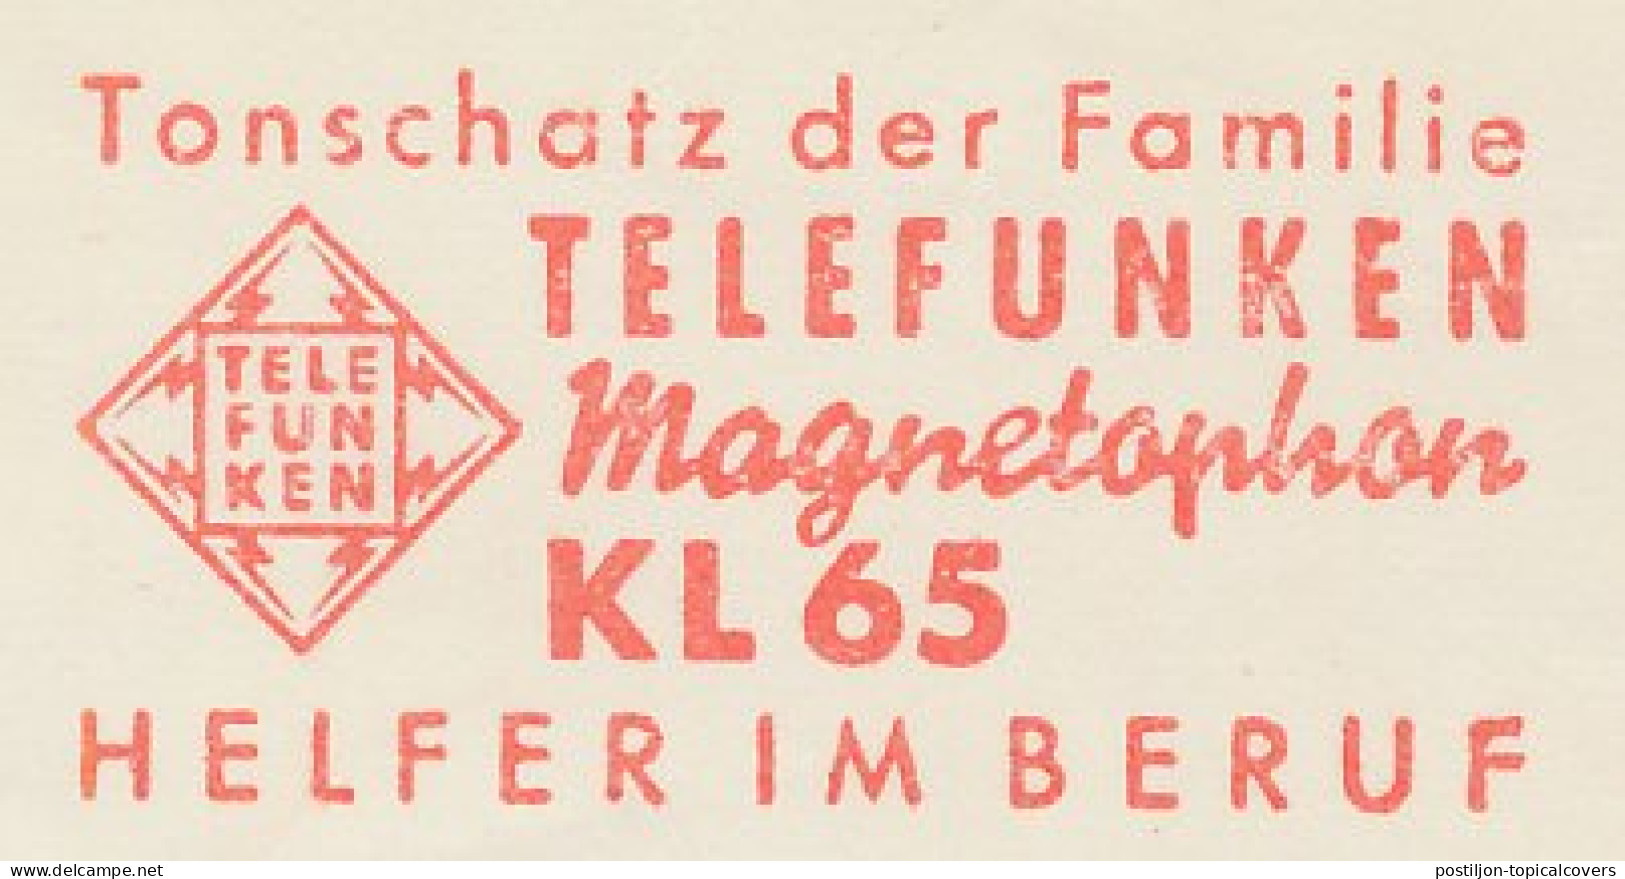 Meter Cut Germany 1959 Tape Recorder - Telefunken - Magnetophon - Música